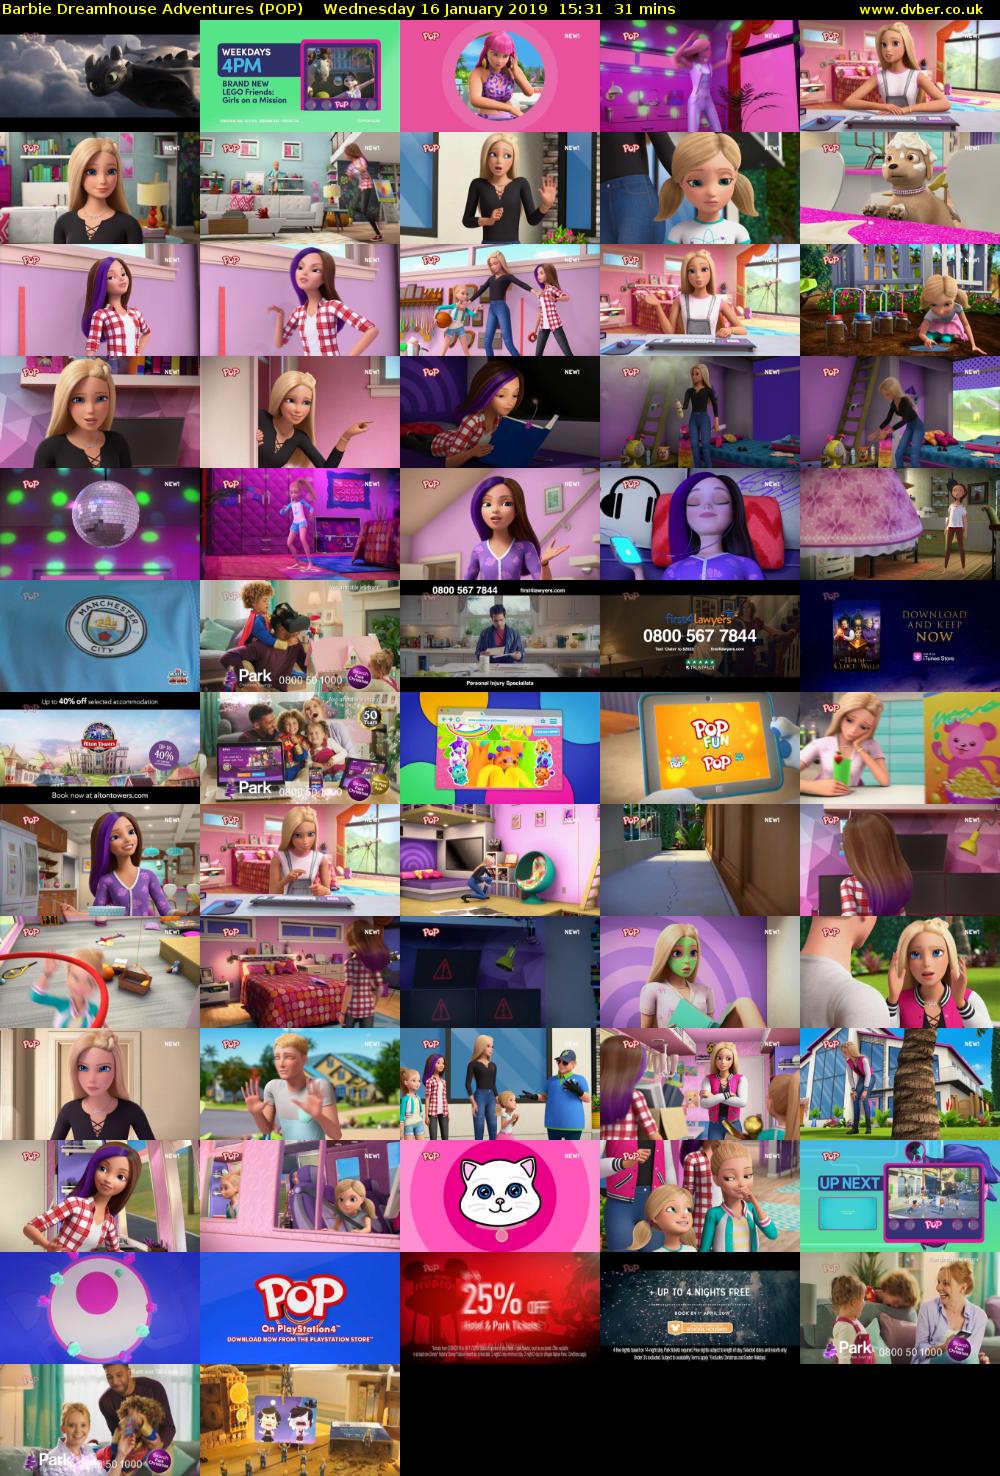 Barbie Dreamhouse Adventures (POP) Wednesday 16 January 2019 15:31 - 16:02